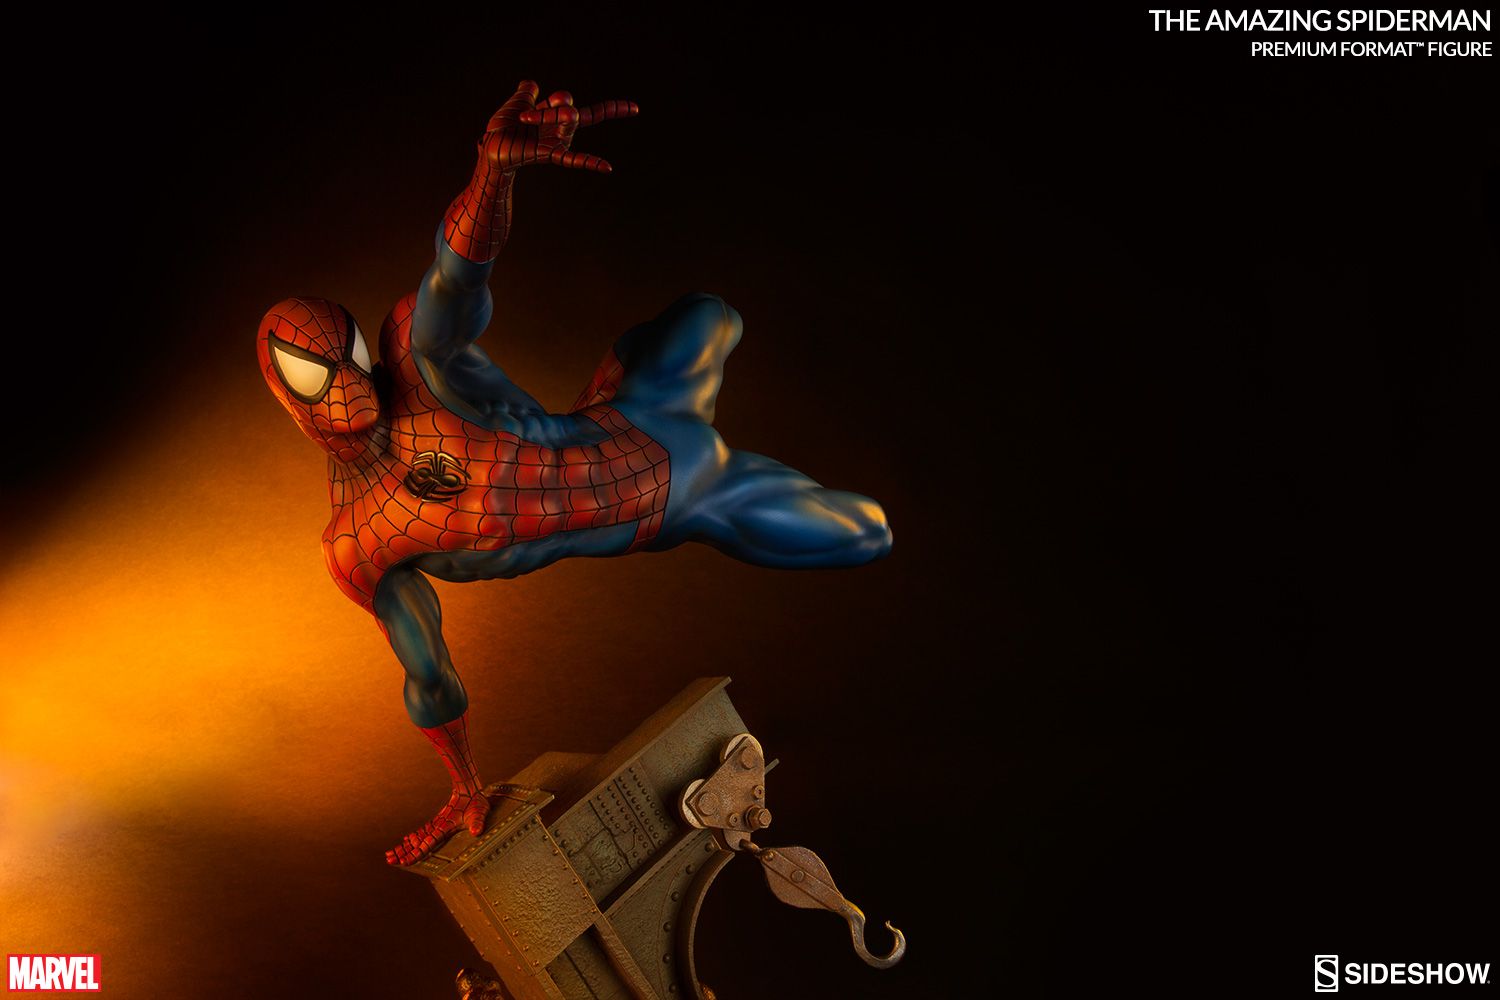 Amazing Spider-Man Premium Format Figure | Sideshow Collectibles